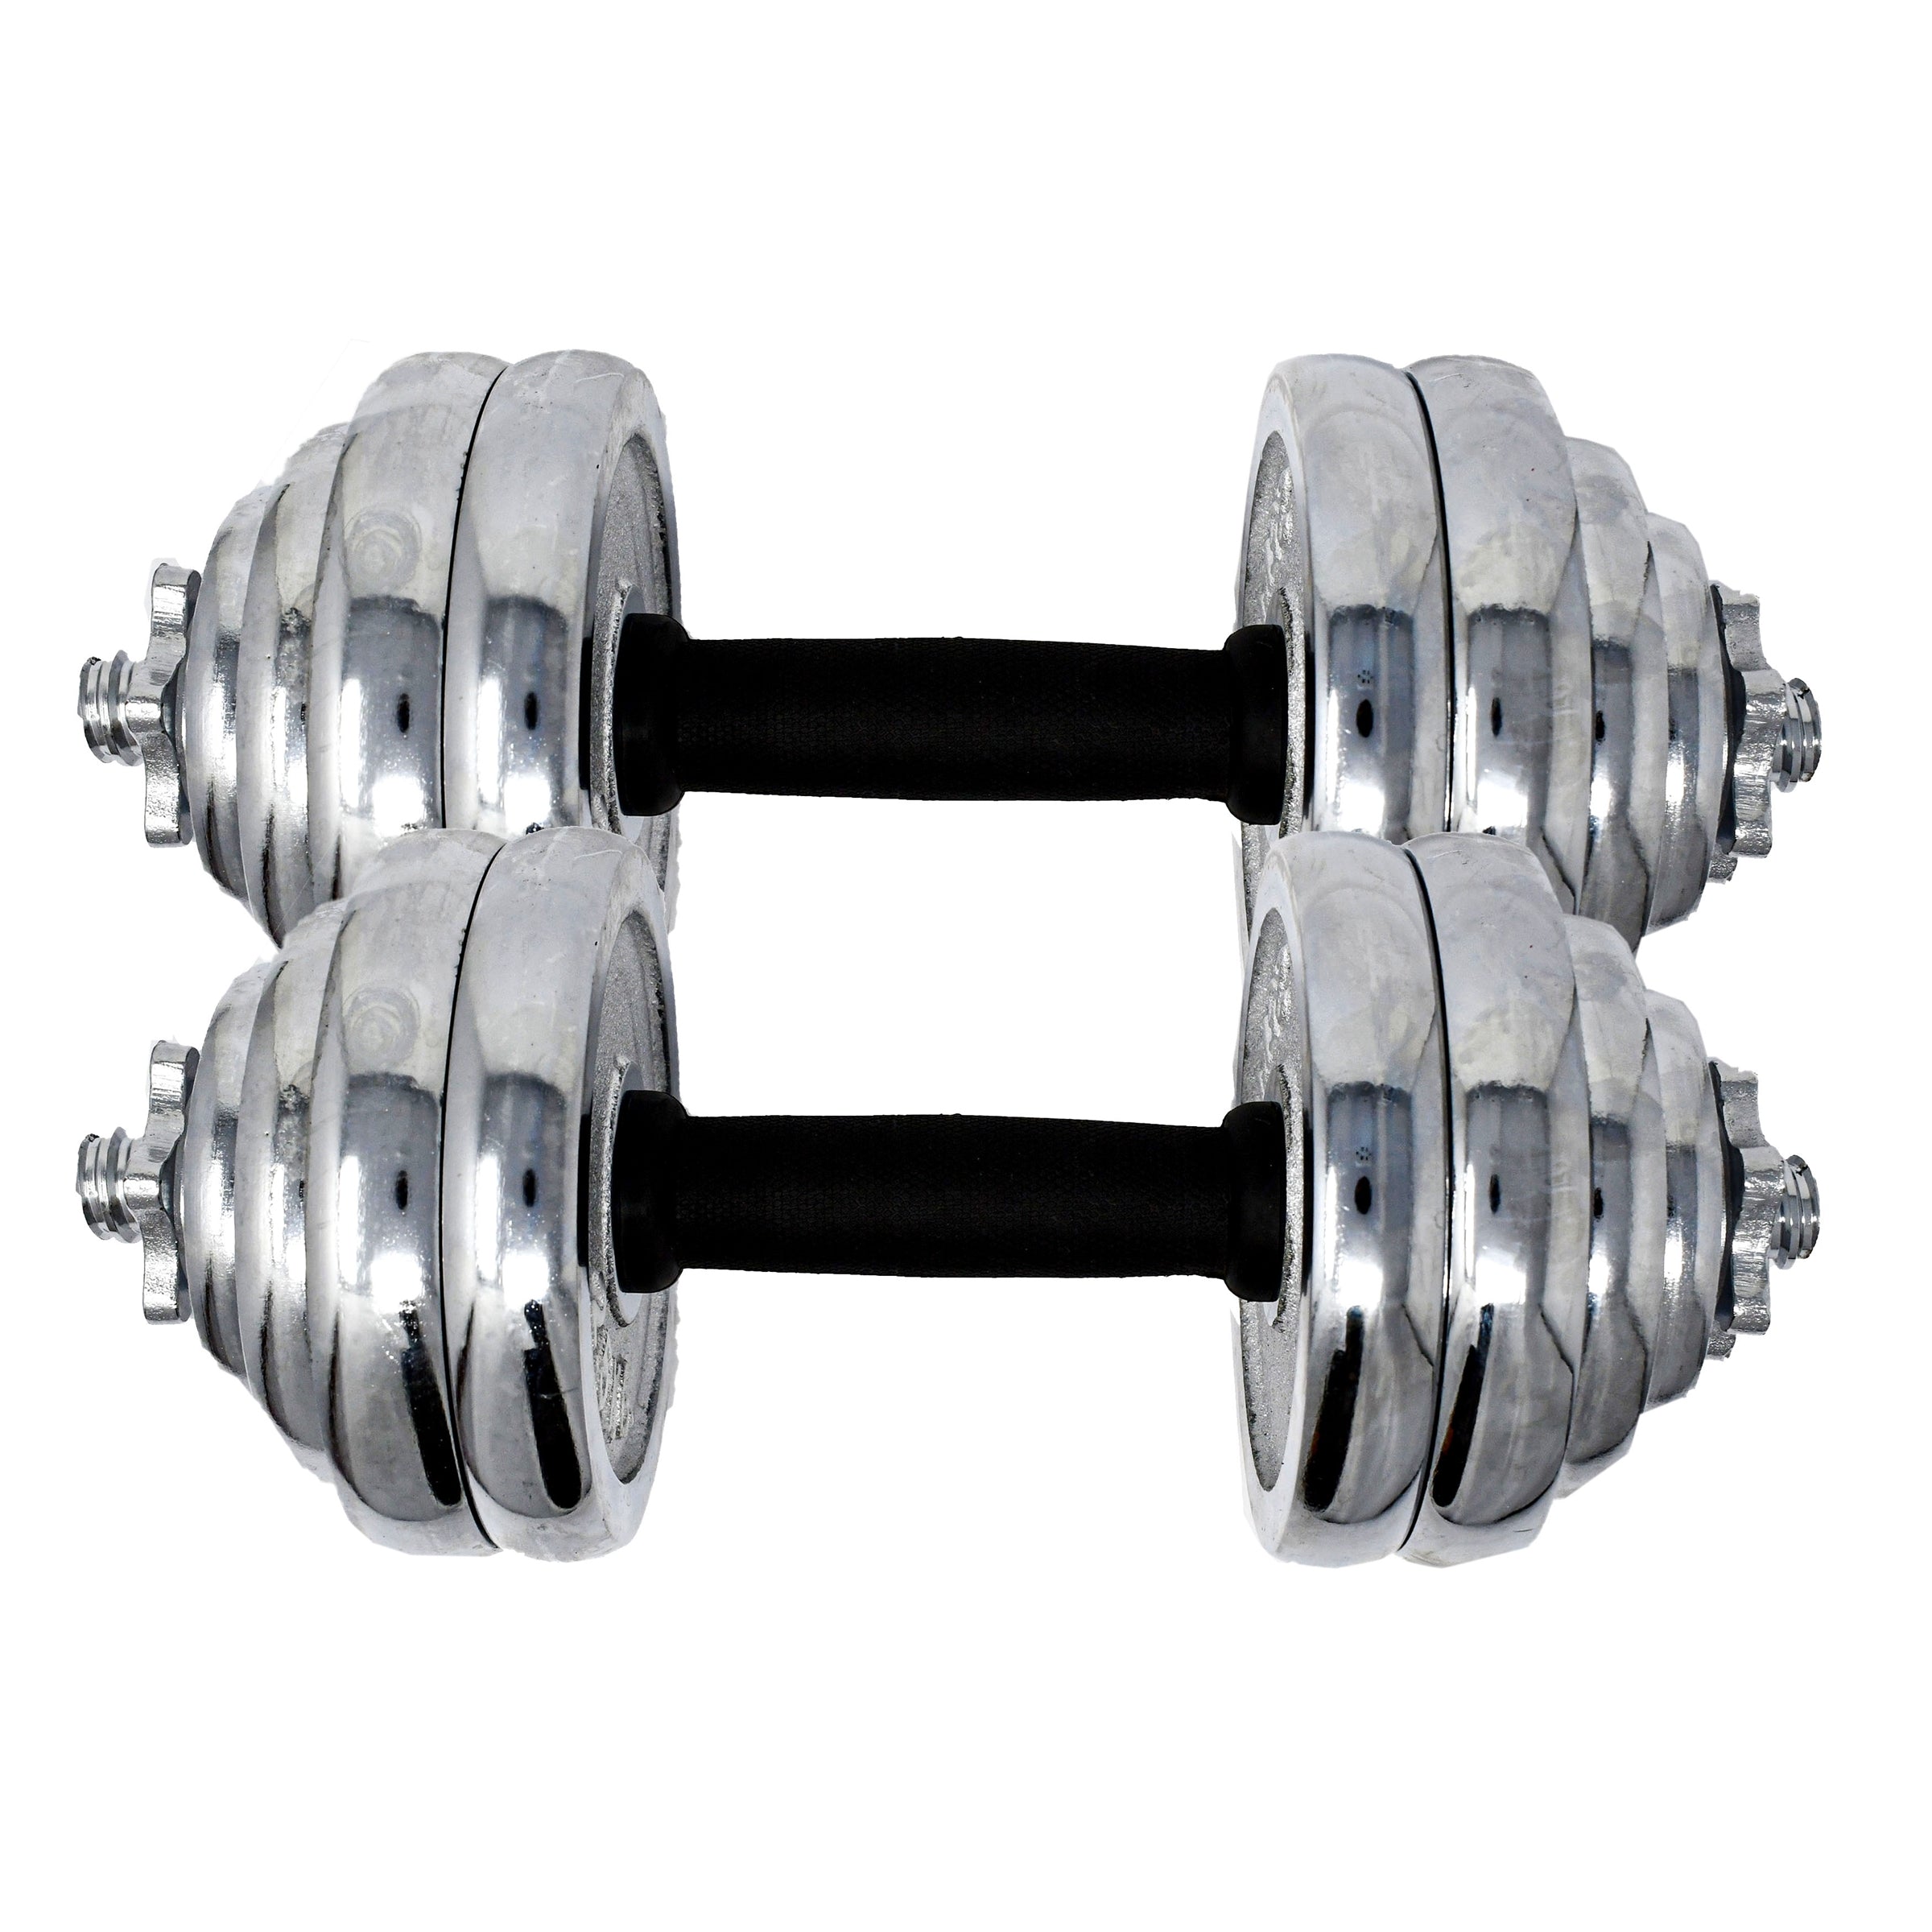 Cast Iron Adjustable Dumbbell Set for Home Gym - 66 lbs (30 kg)